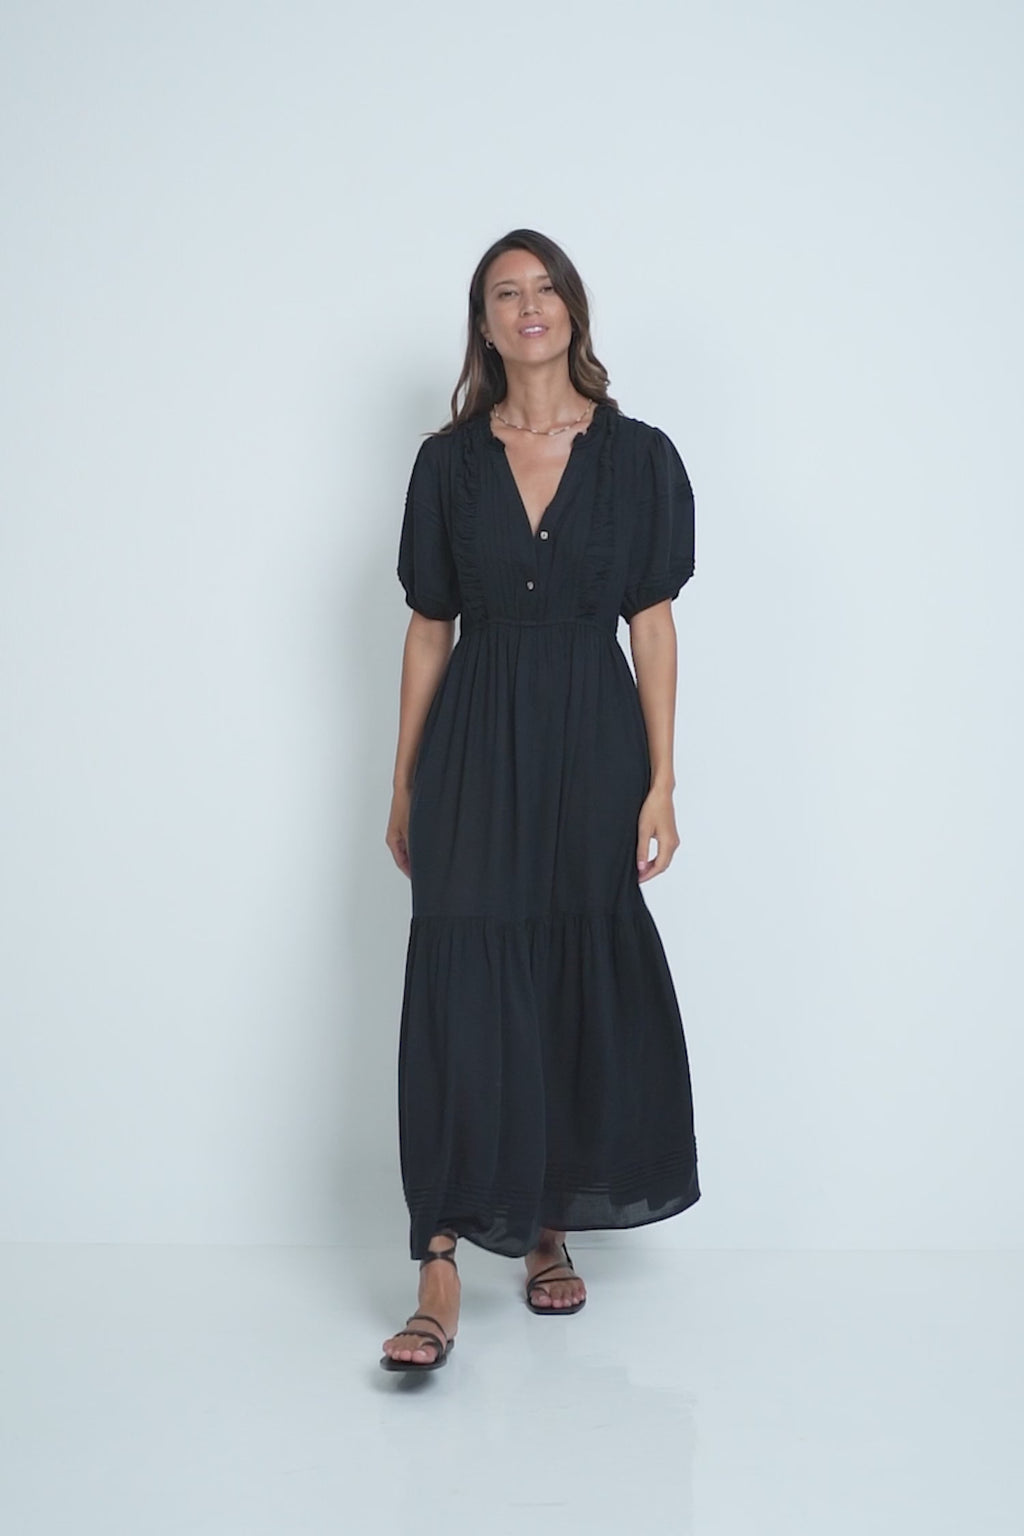 A Model Wearing a Black Classic Maxi Dress by LILYA